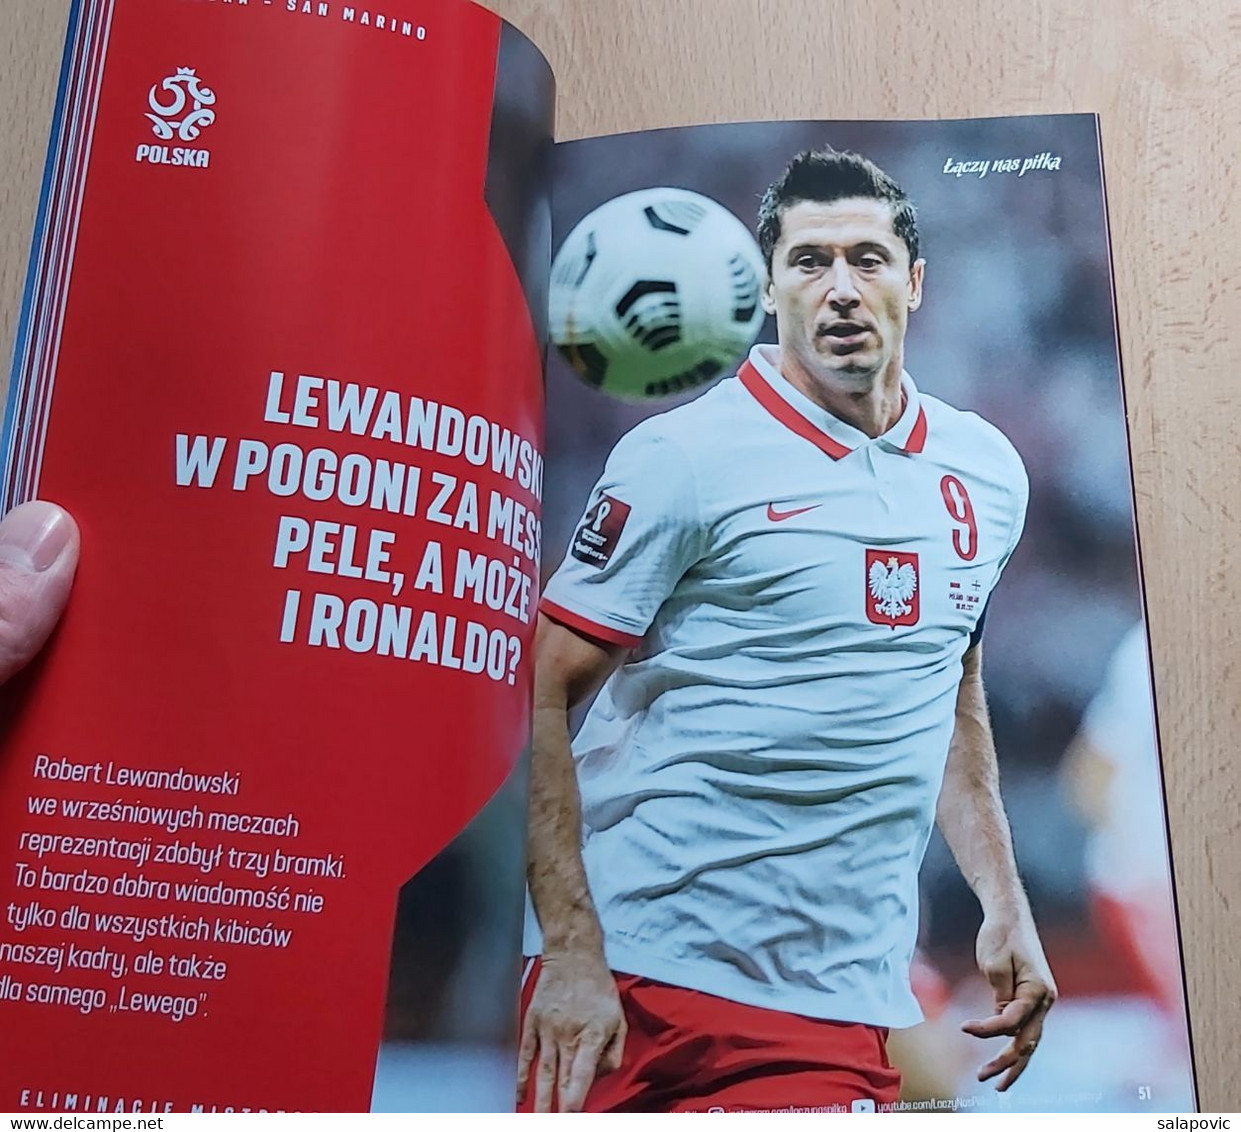 Poland V San Marino QUALIFICATIONS FOR FIFA WORLD CUP QATAR 2022, 9. 10. 2021 FOOTBALL CROATIA FOOTBALL MATCH PROGRAM - Bücher